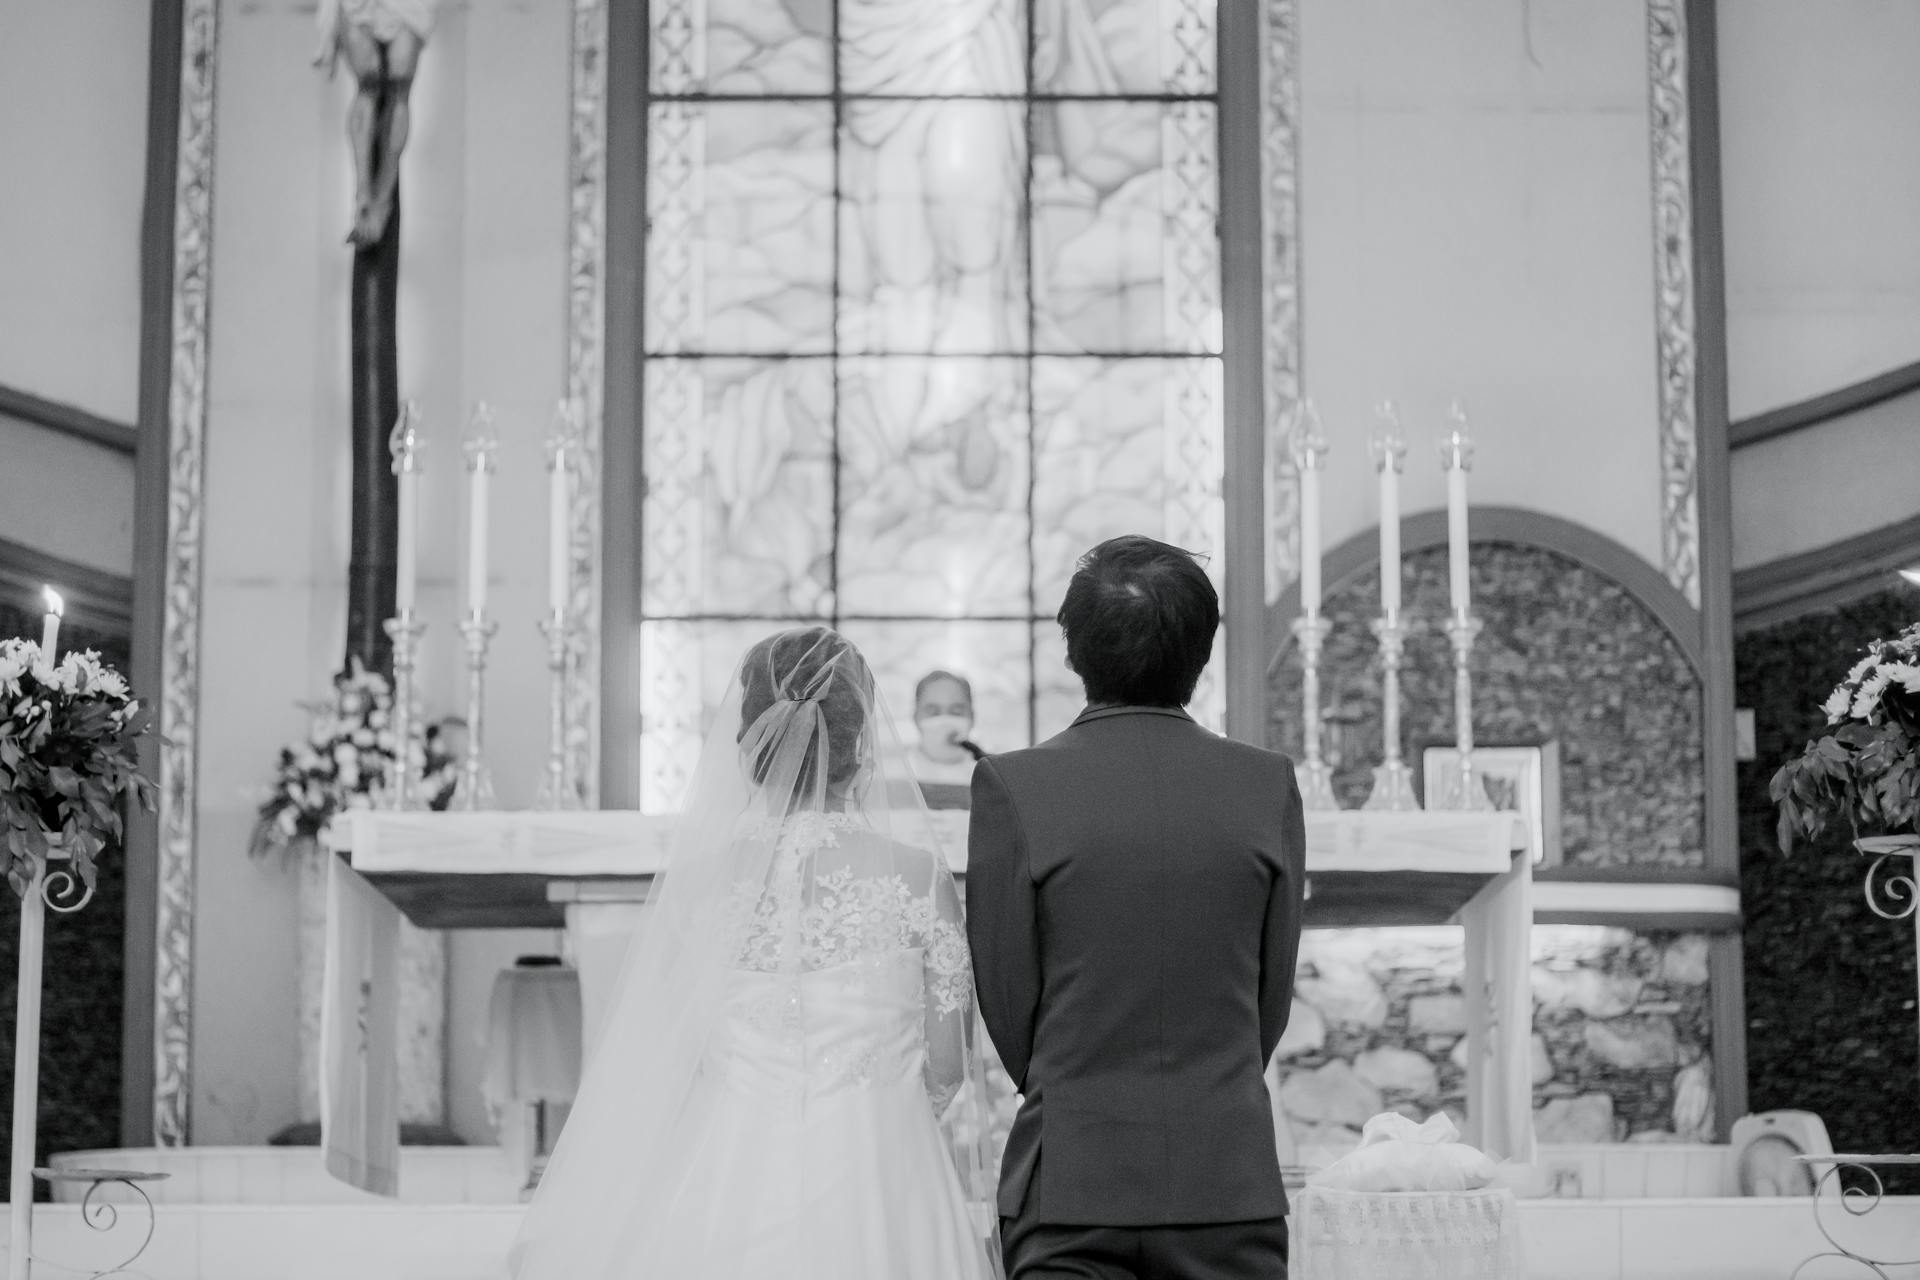 Bride and groom at altar | Source: Pexels